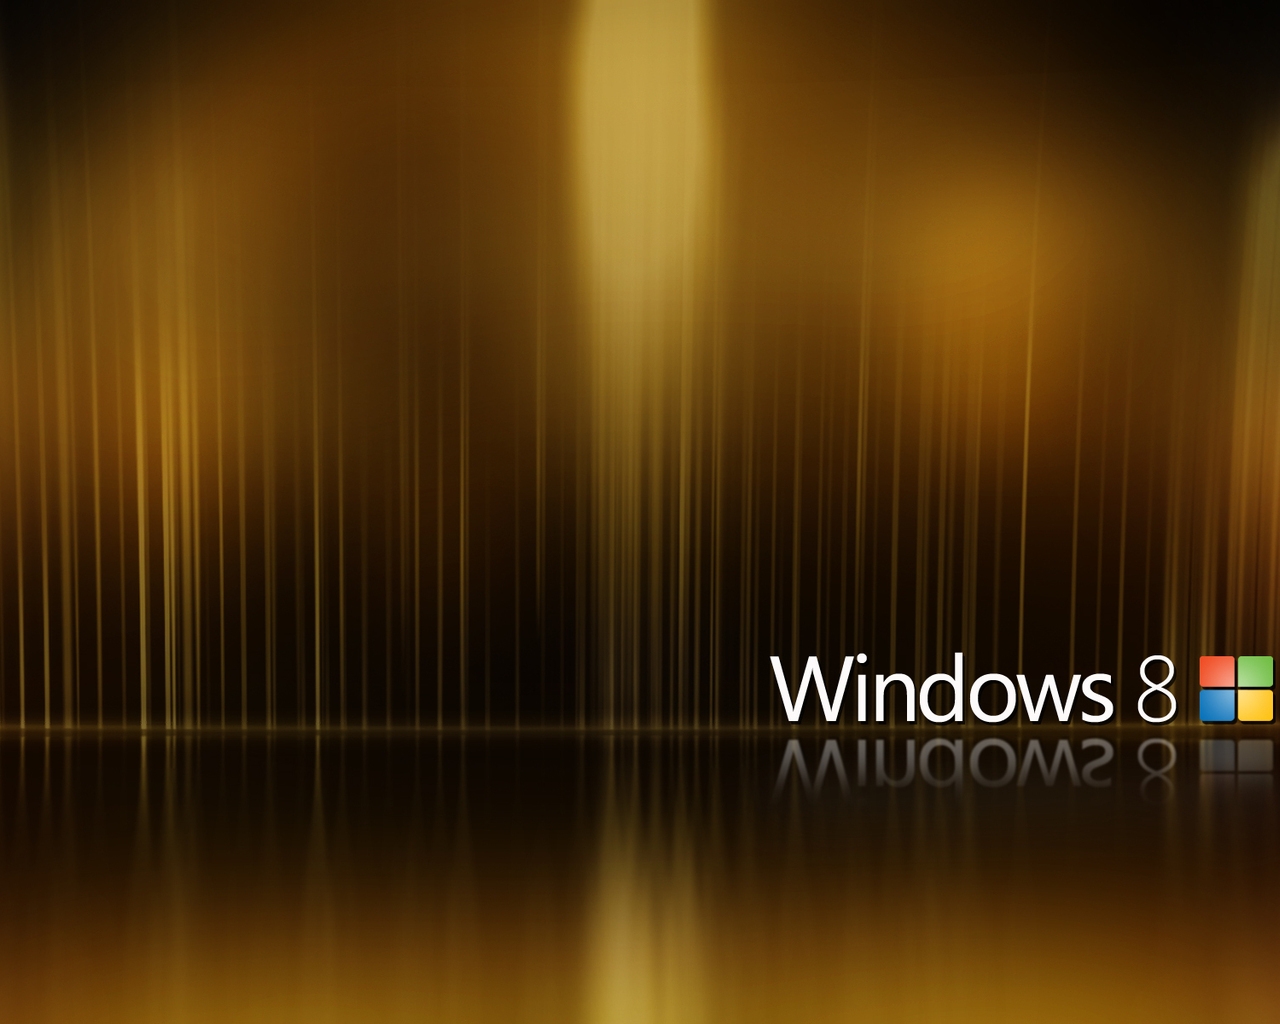 Fantastic Windows 8 for 1280 x 1024 resolution